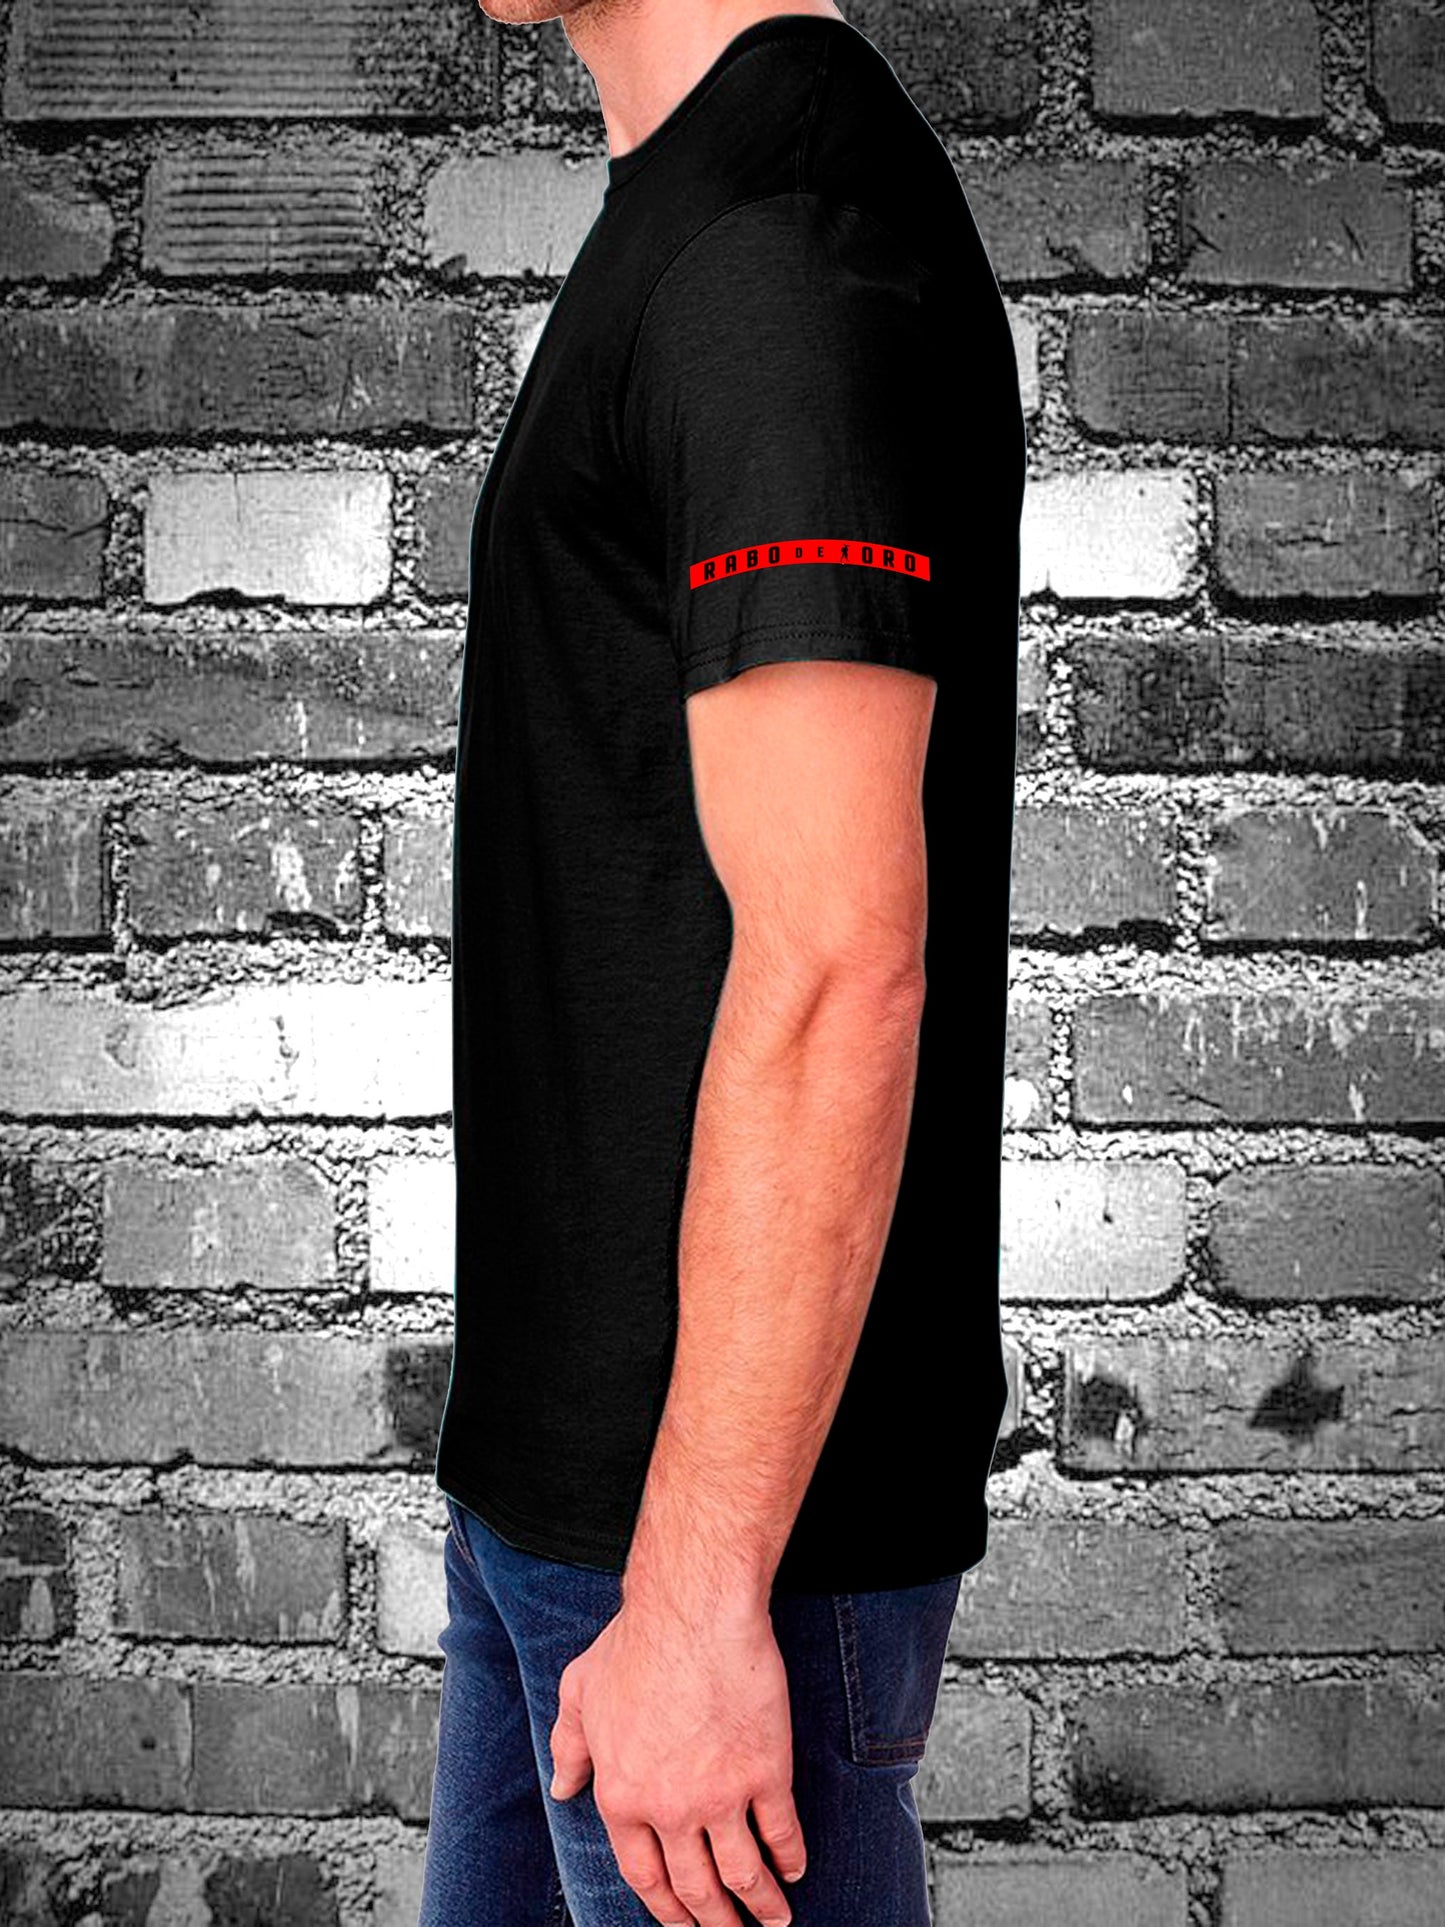 DOM Camiseta negra con detalles Código BDSM Hanky